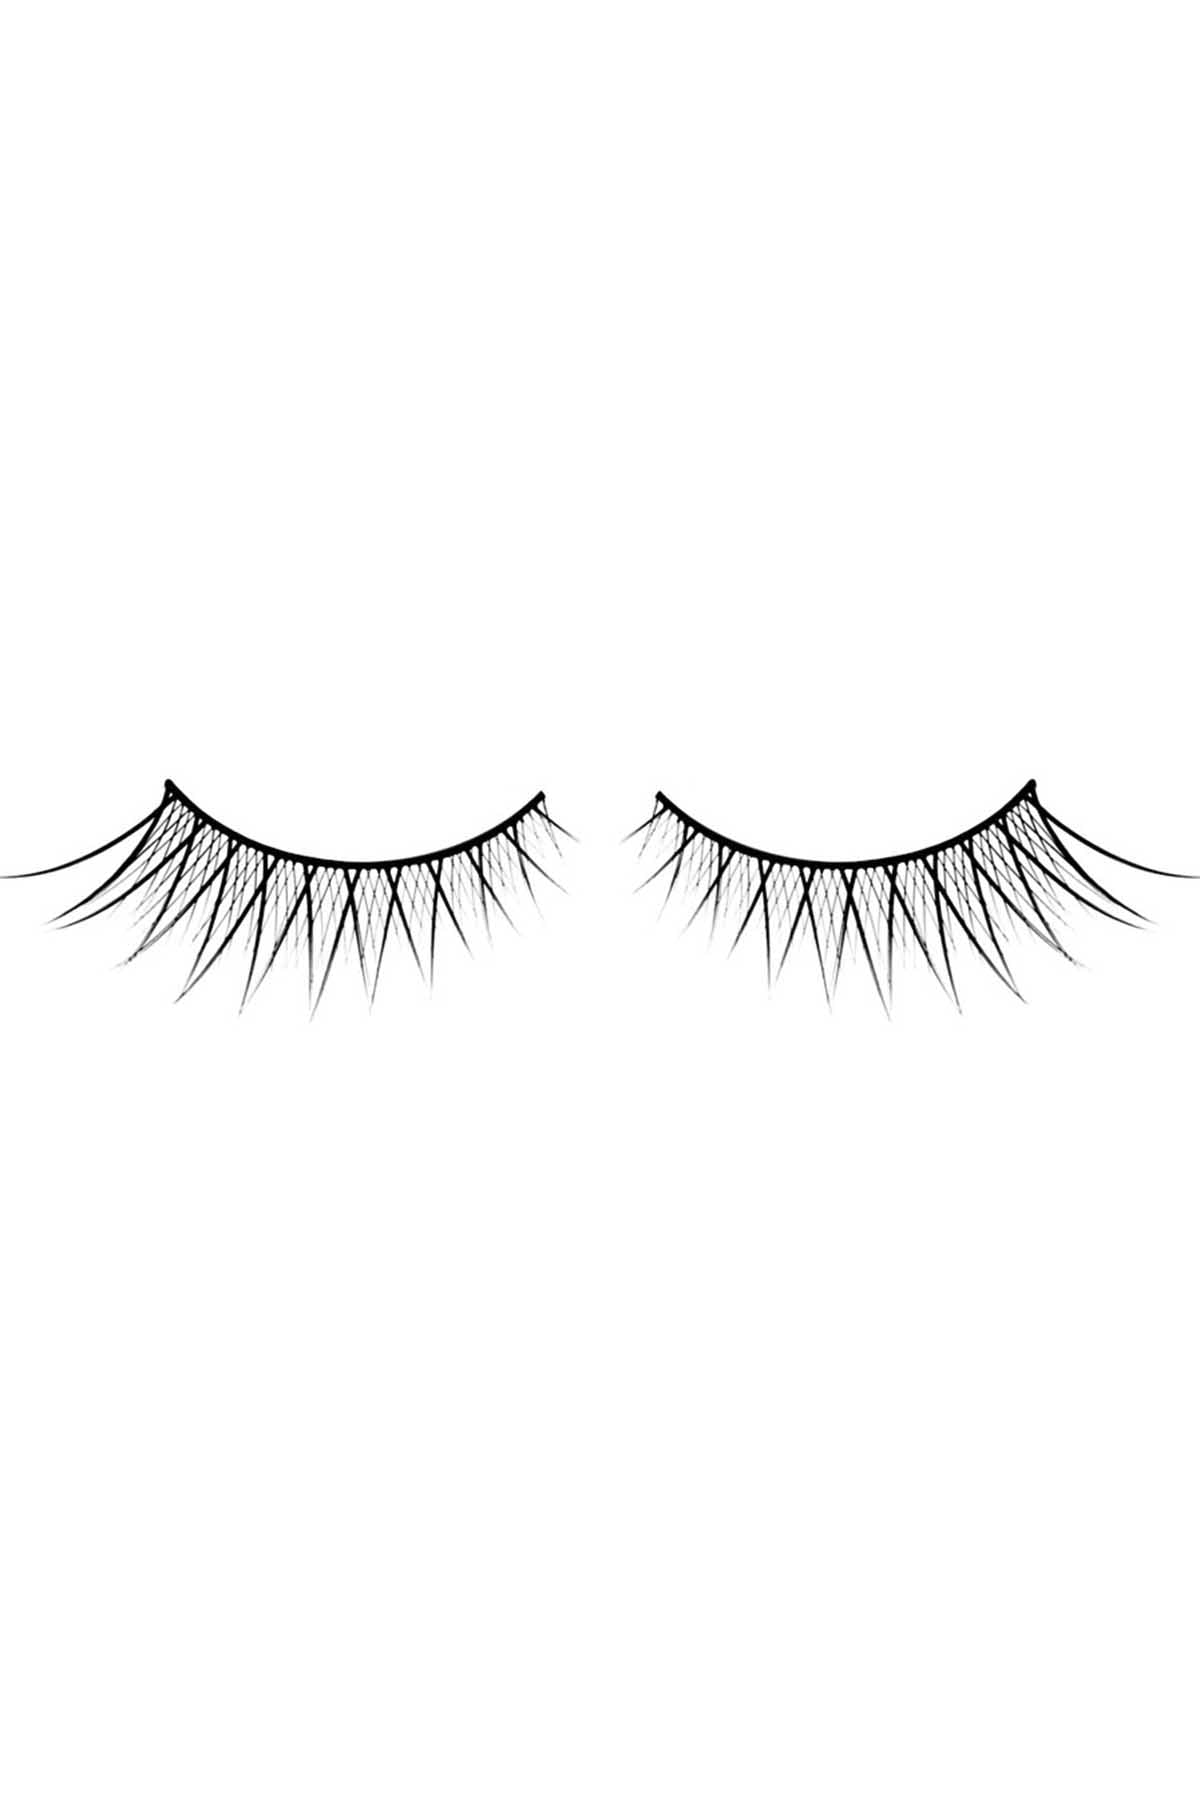 Baci Black Criss-Cross Outer-Lid Natural Look Premium Eyelashes